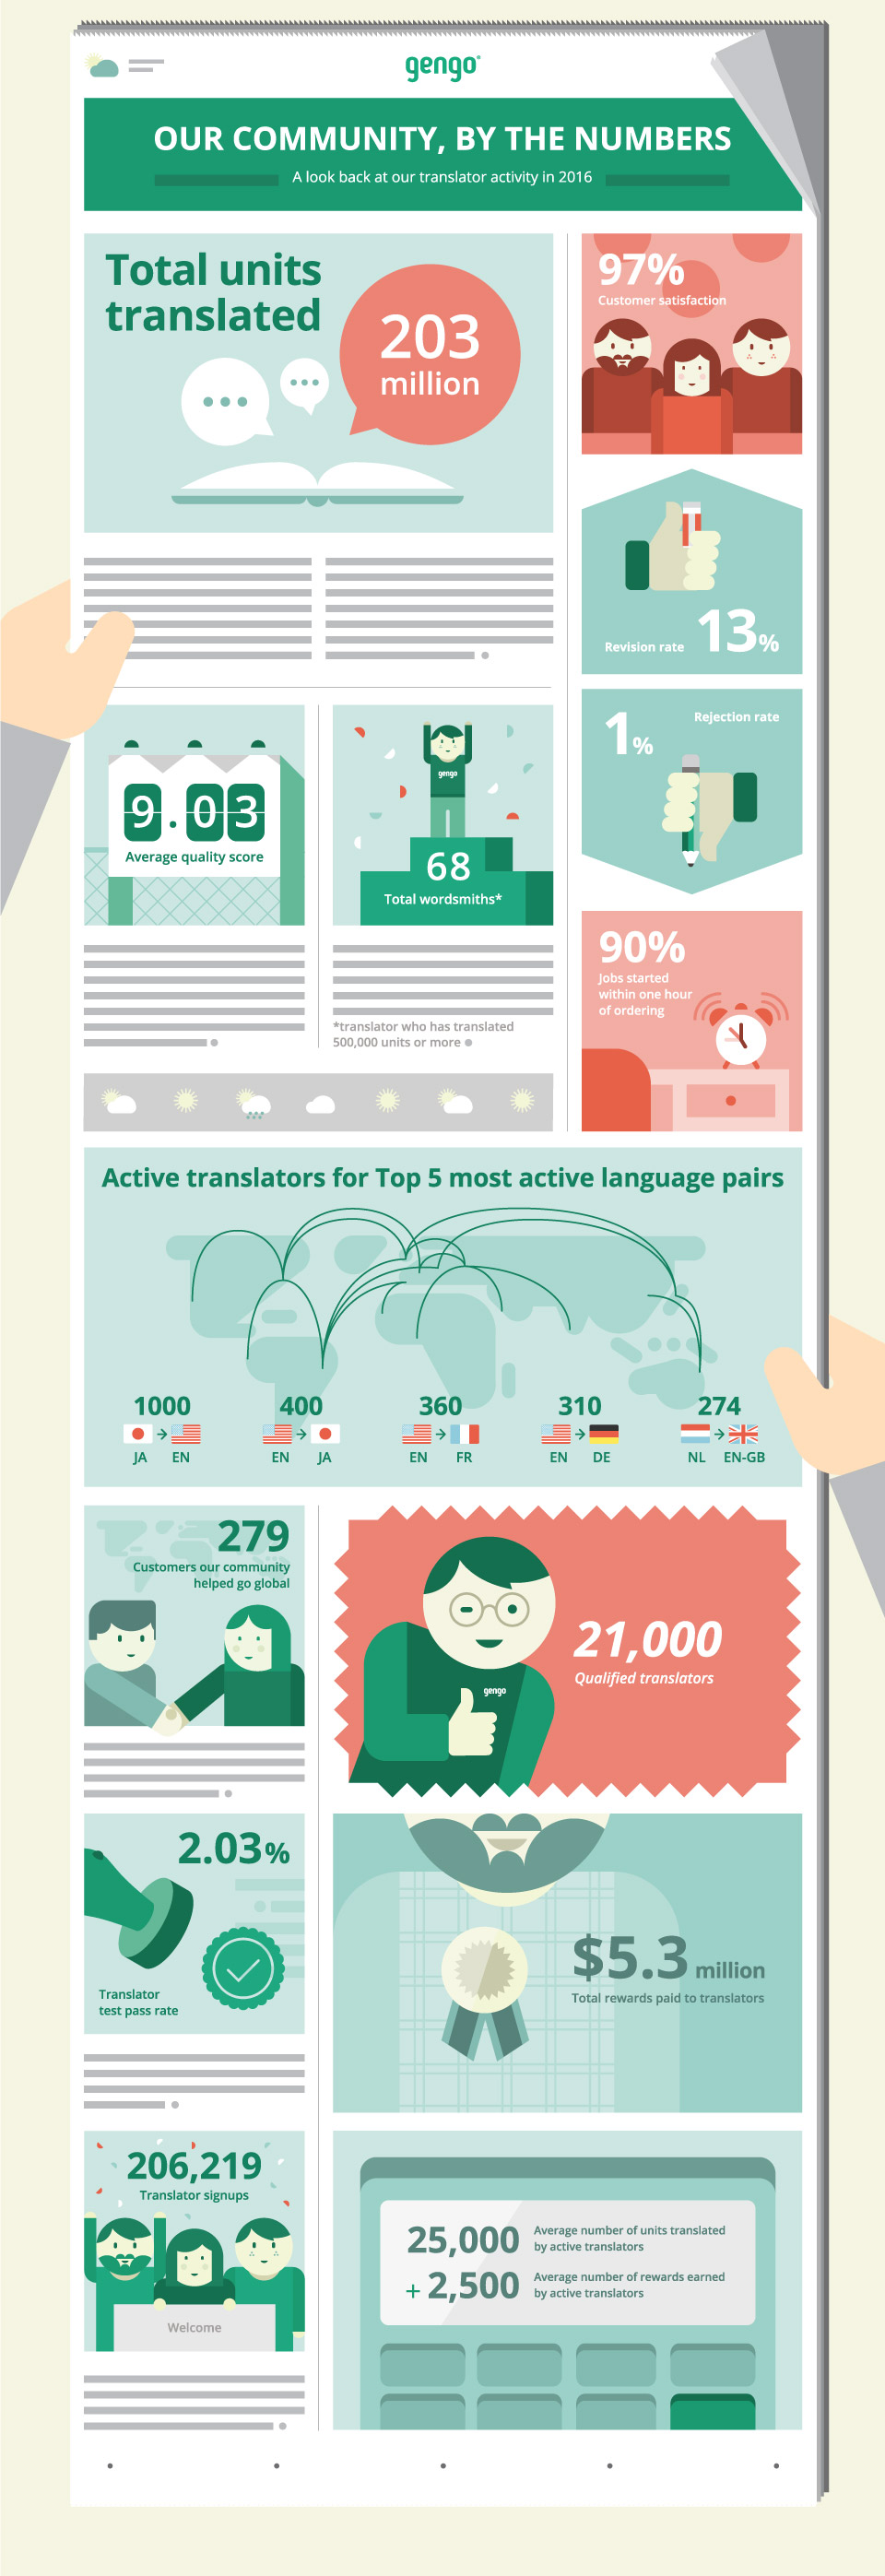 gengo japan human translation service - Infographic - community stats